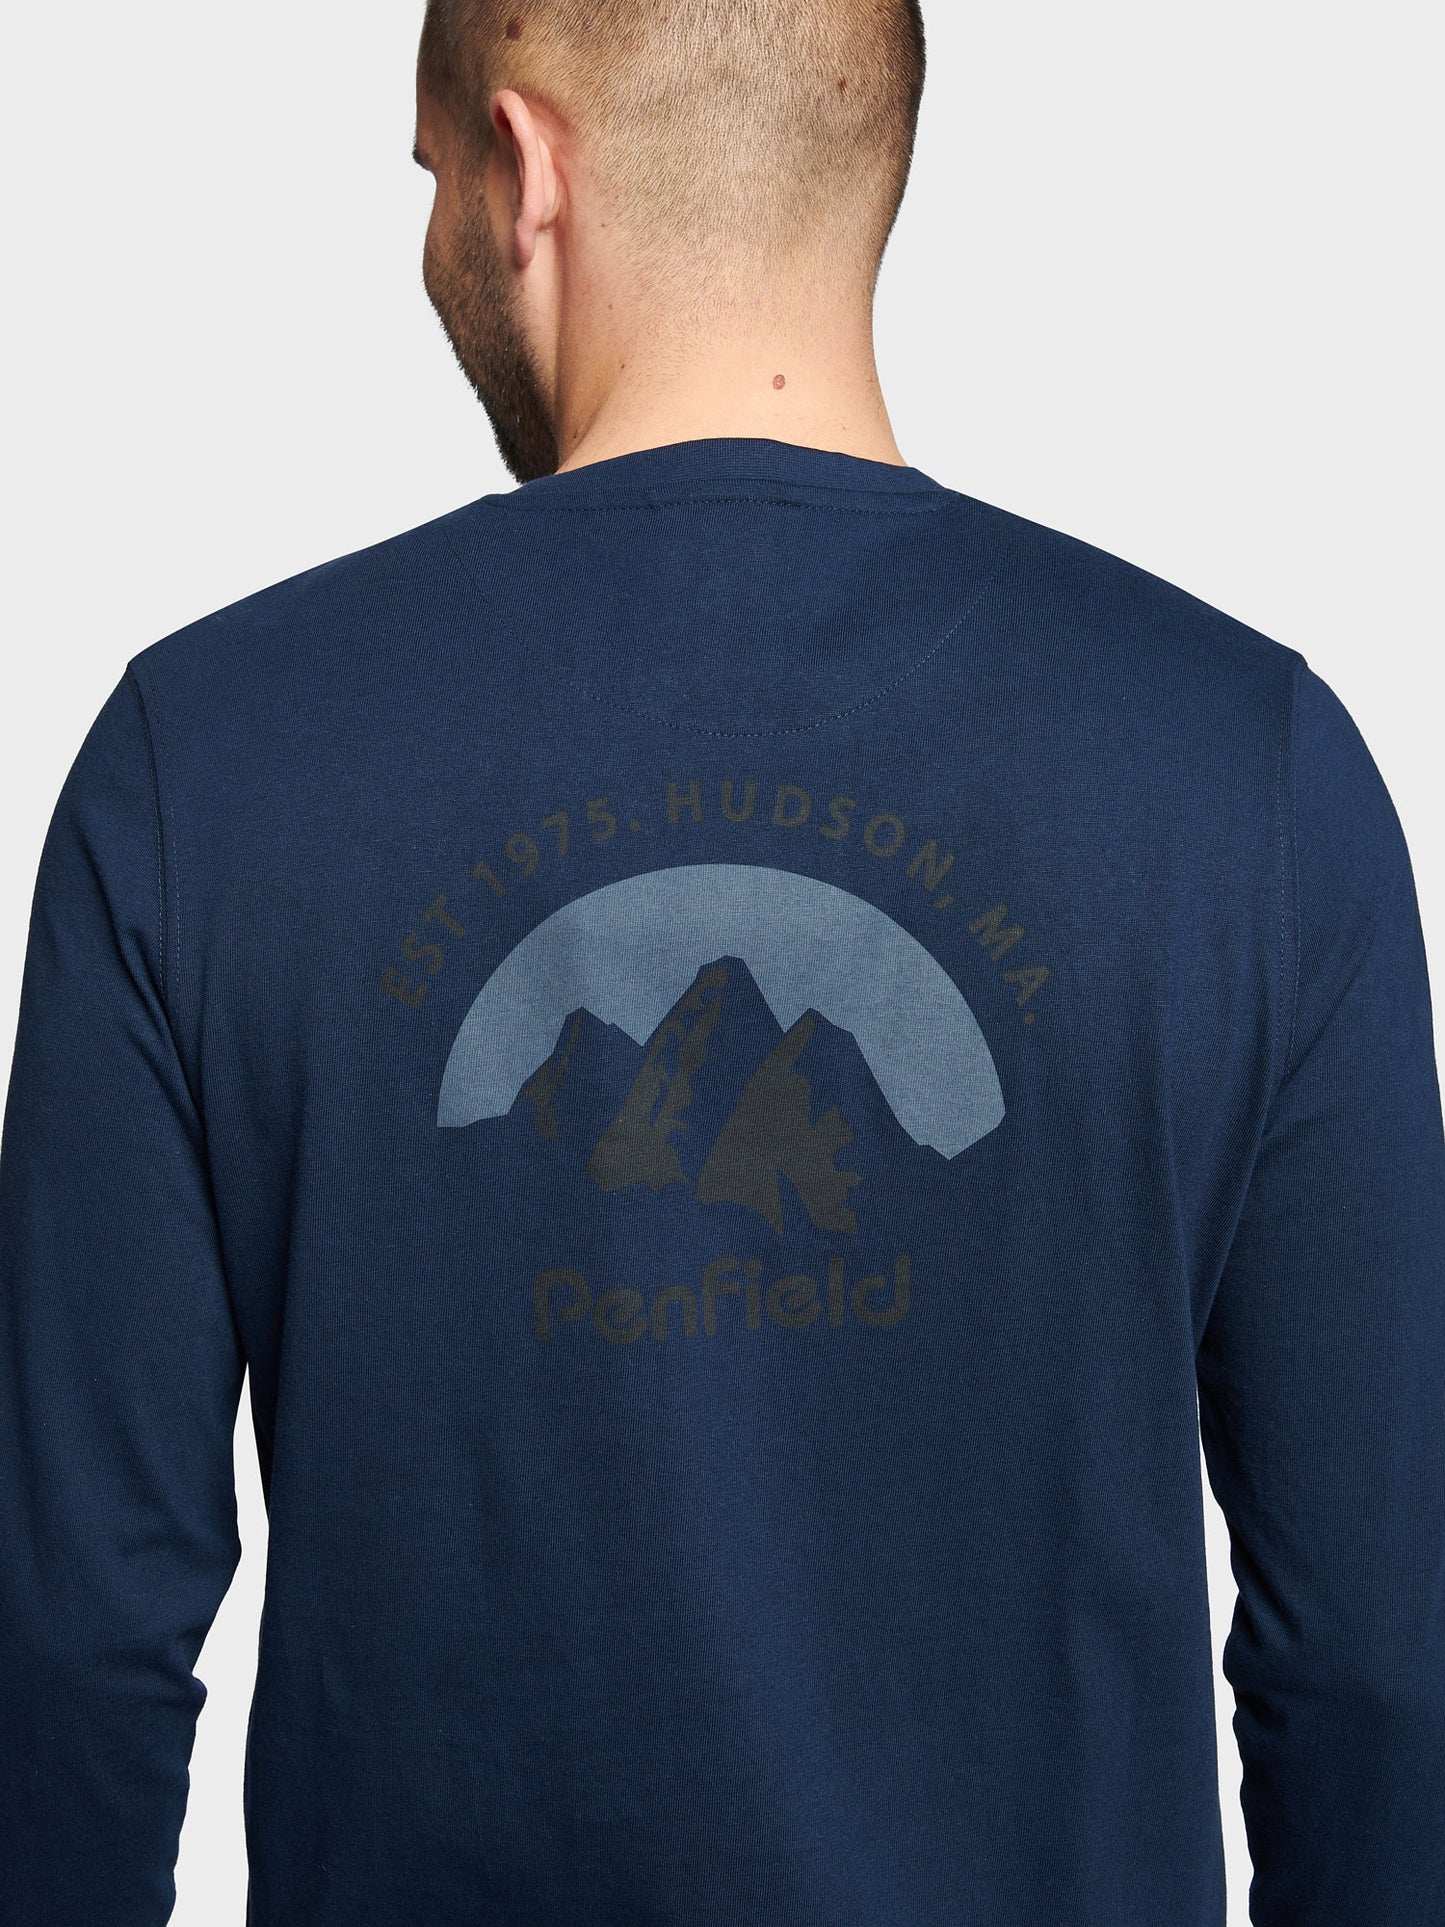 Arc Mountain Long Sleeve T-Shirt in Navy Blue